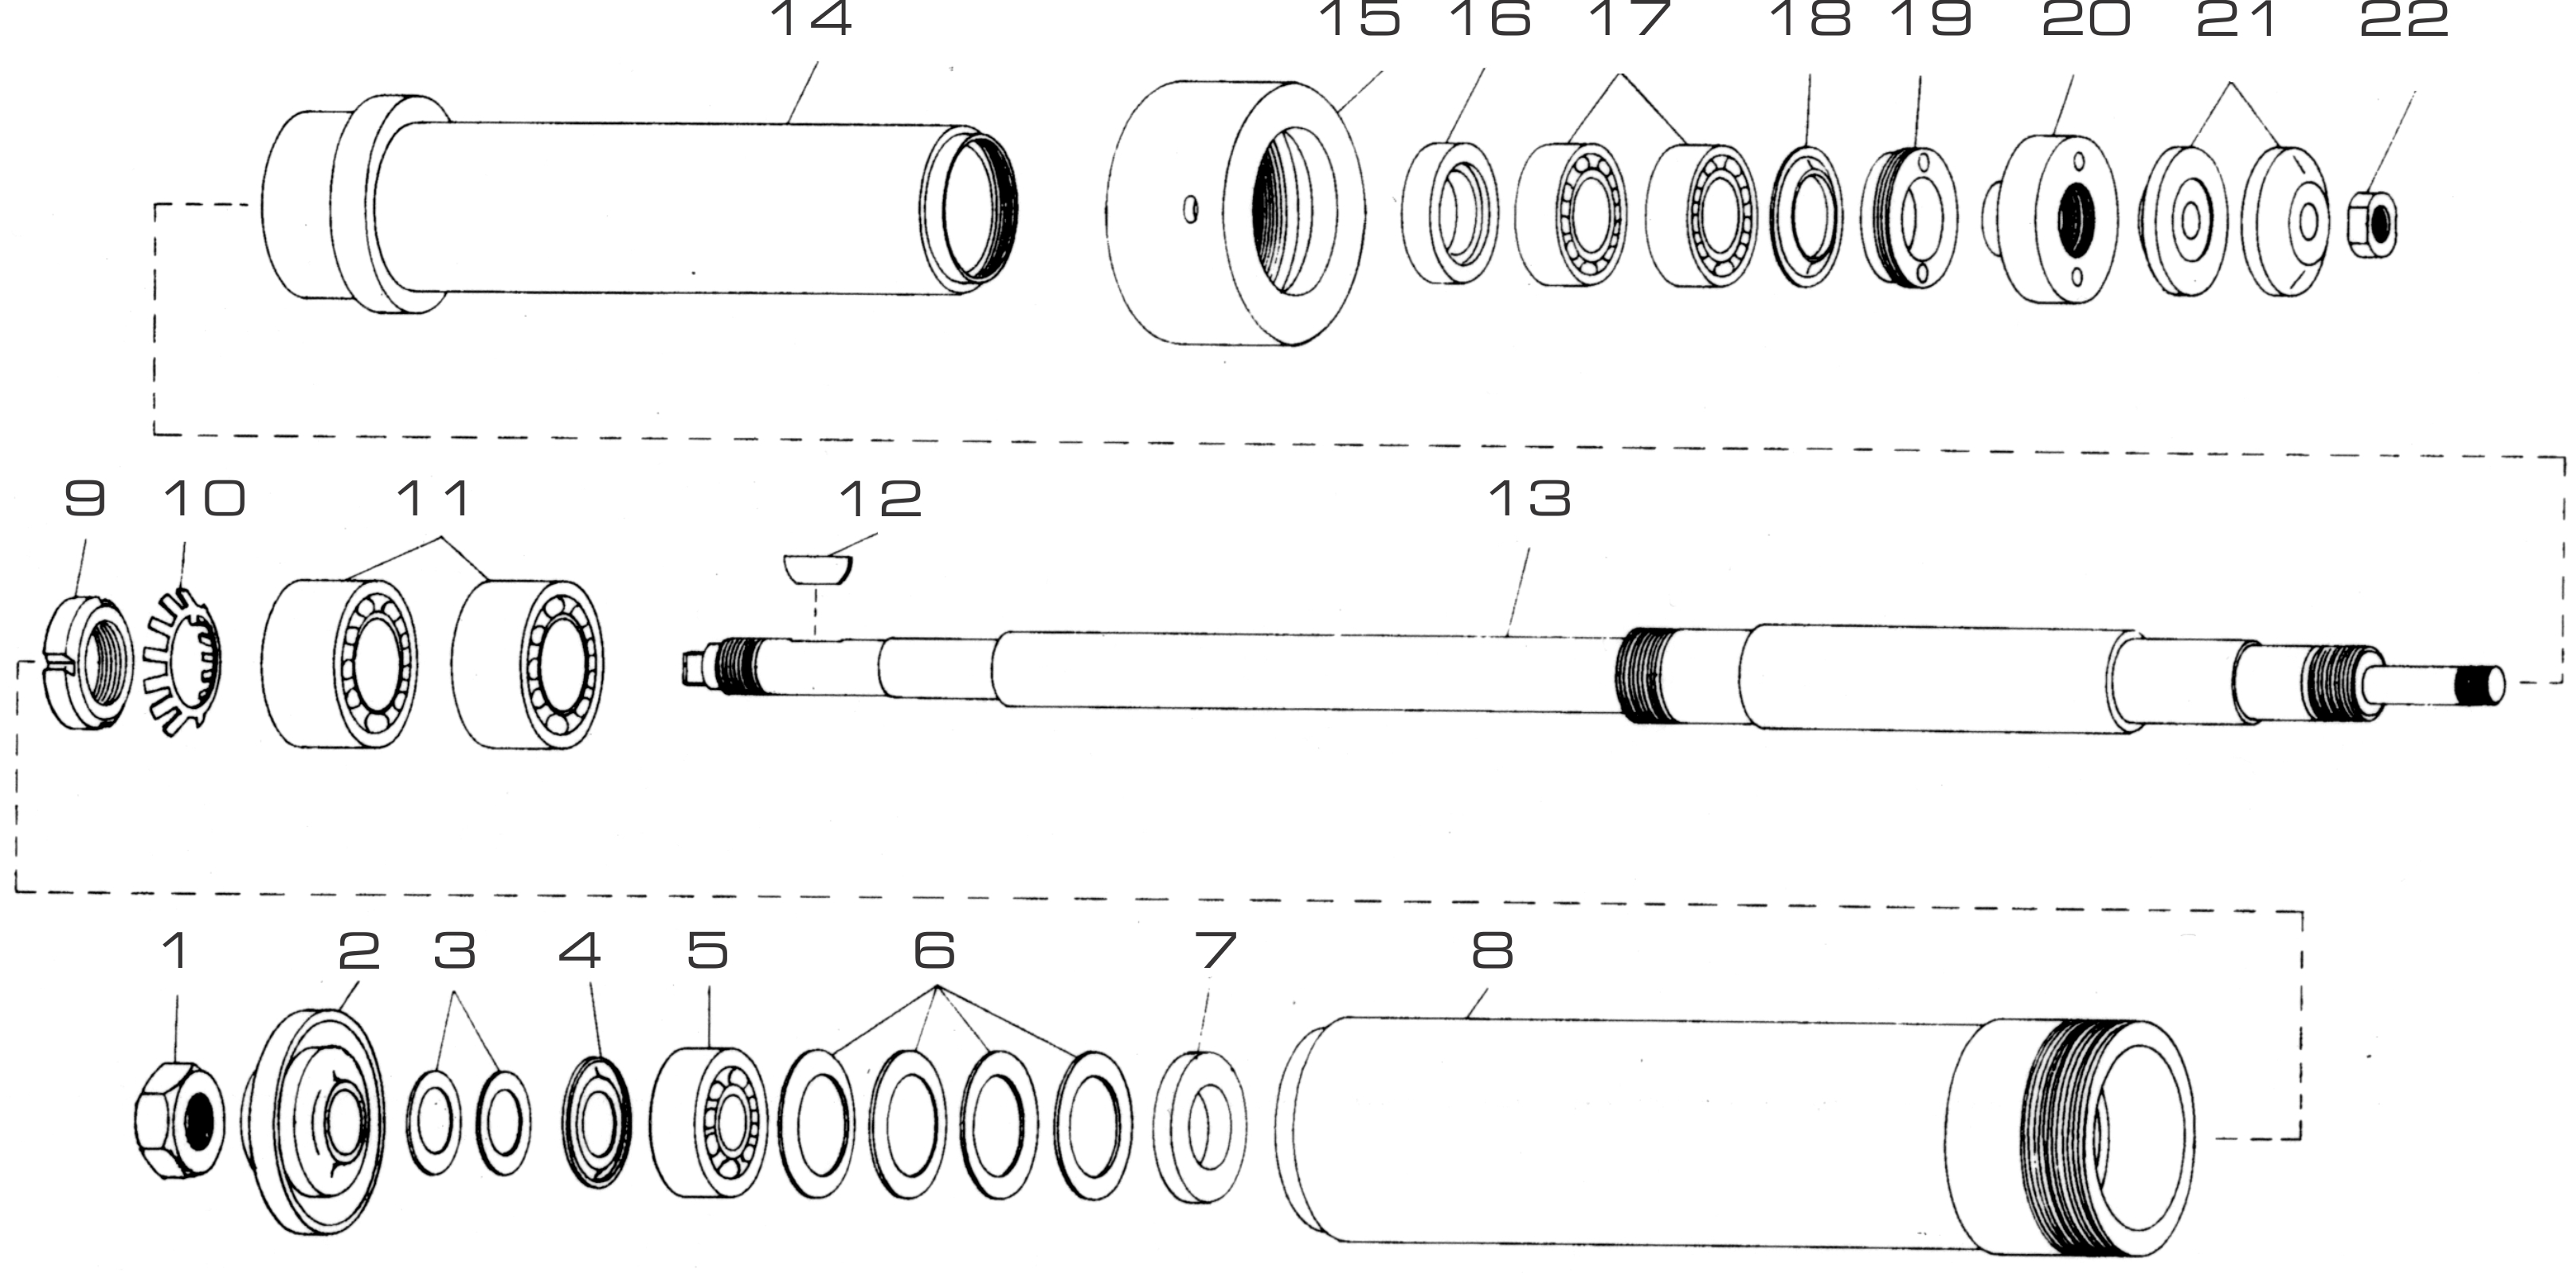 Tool Post Grinder 16" Internal Spindle Replacement Parts | Dumore Series 12 & 25 Tool Post Grinders